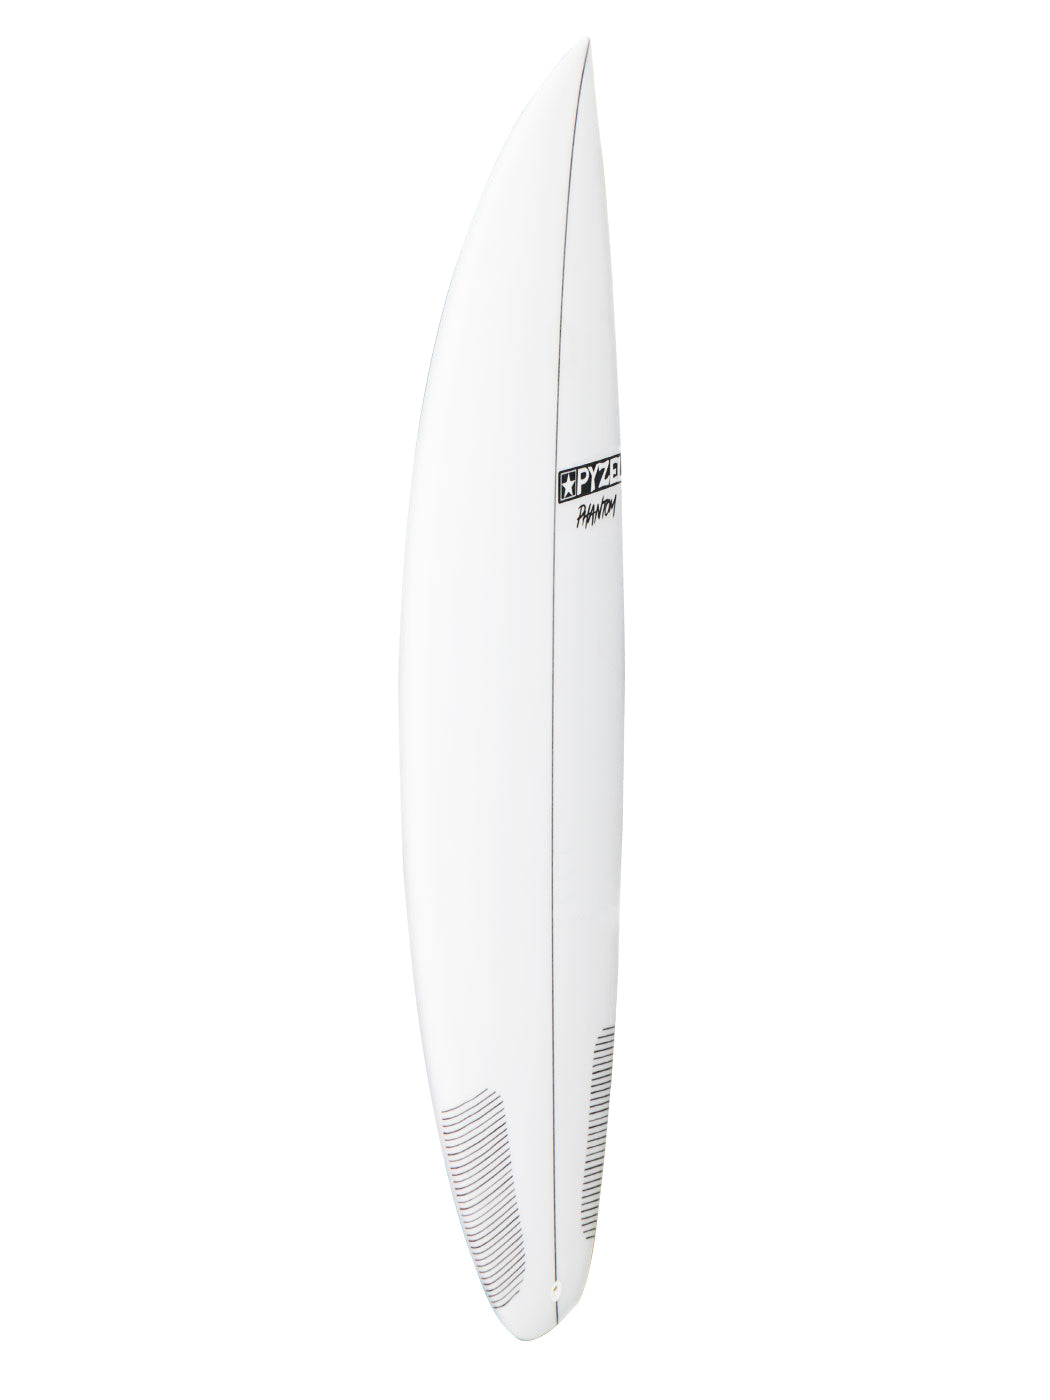 Pyzel Surfboards Phantom FCS2 5ft9in